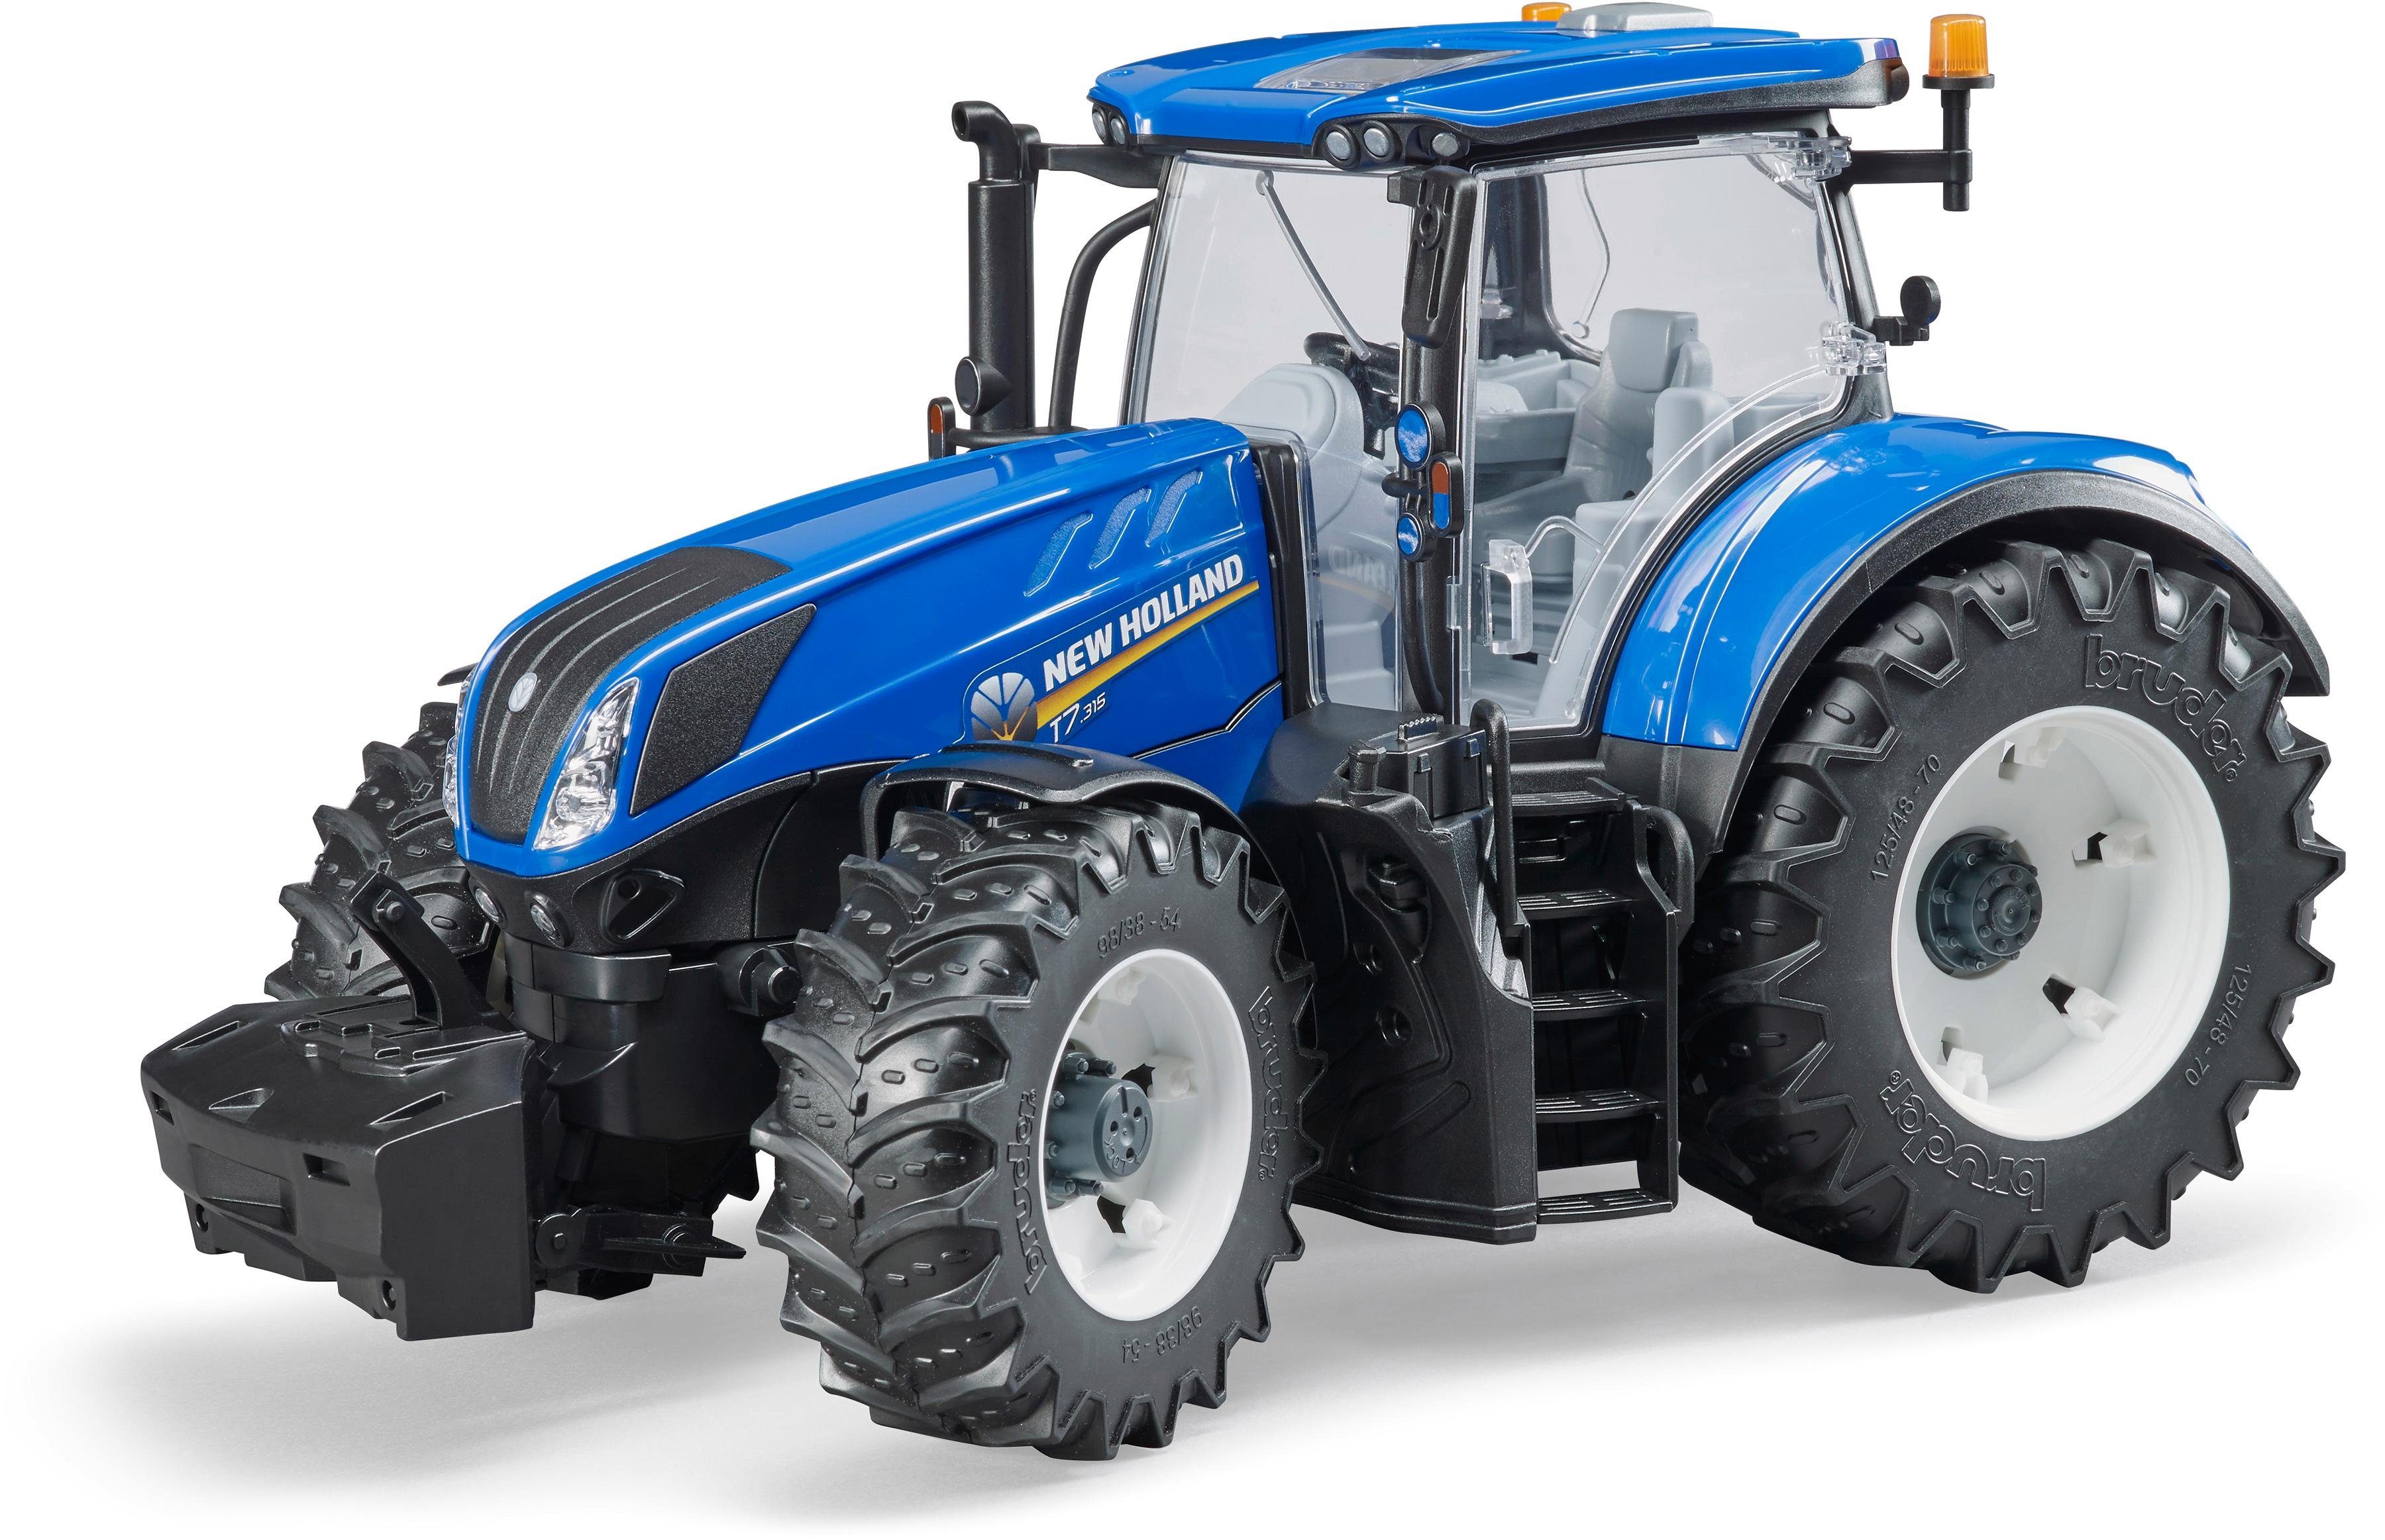 SIKU Spielzeug Modell Traktor Spielzeugtraktor New Holland mit Frontlader 1396